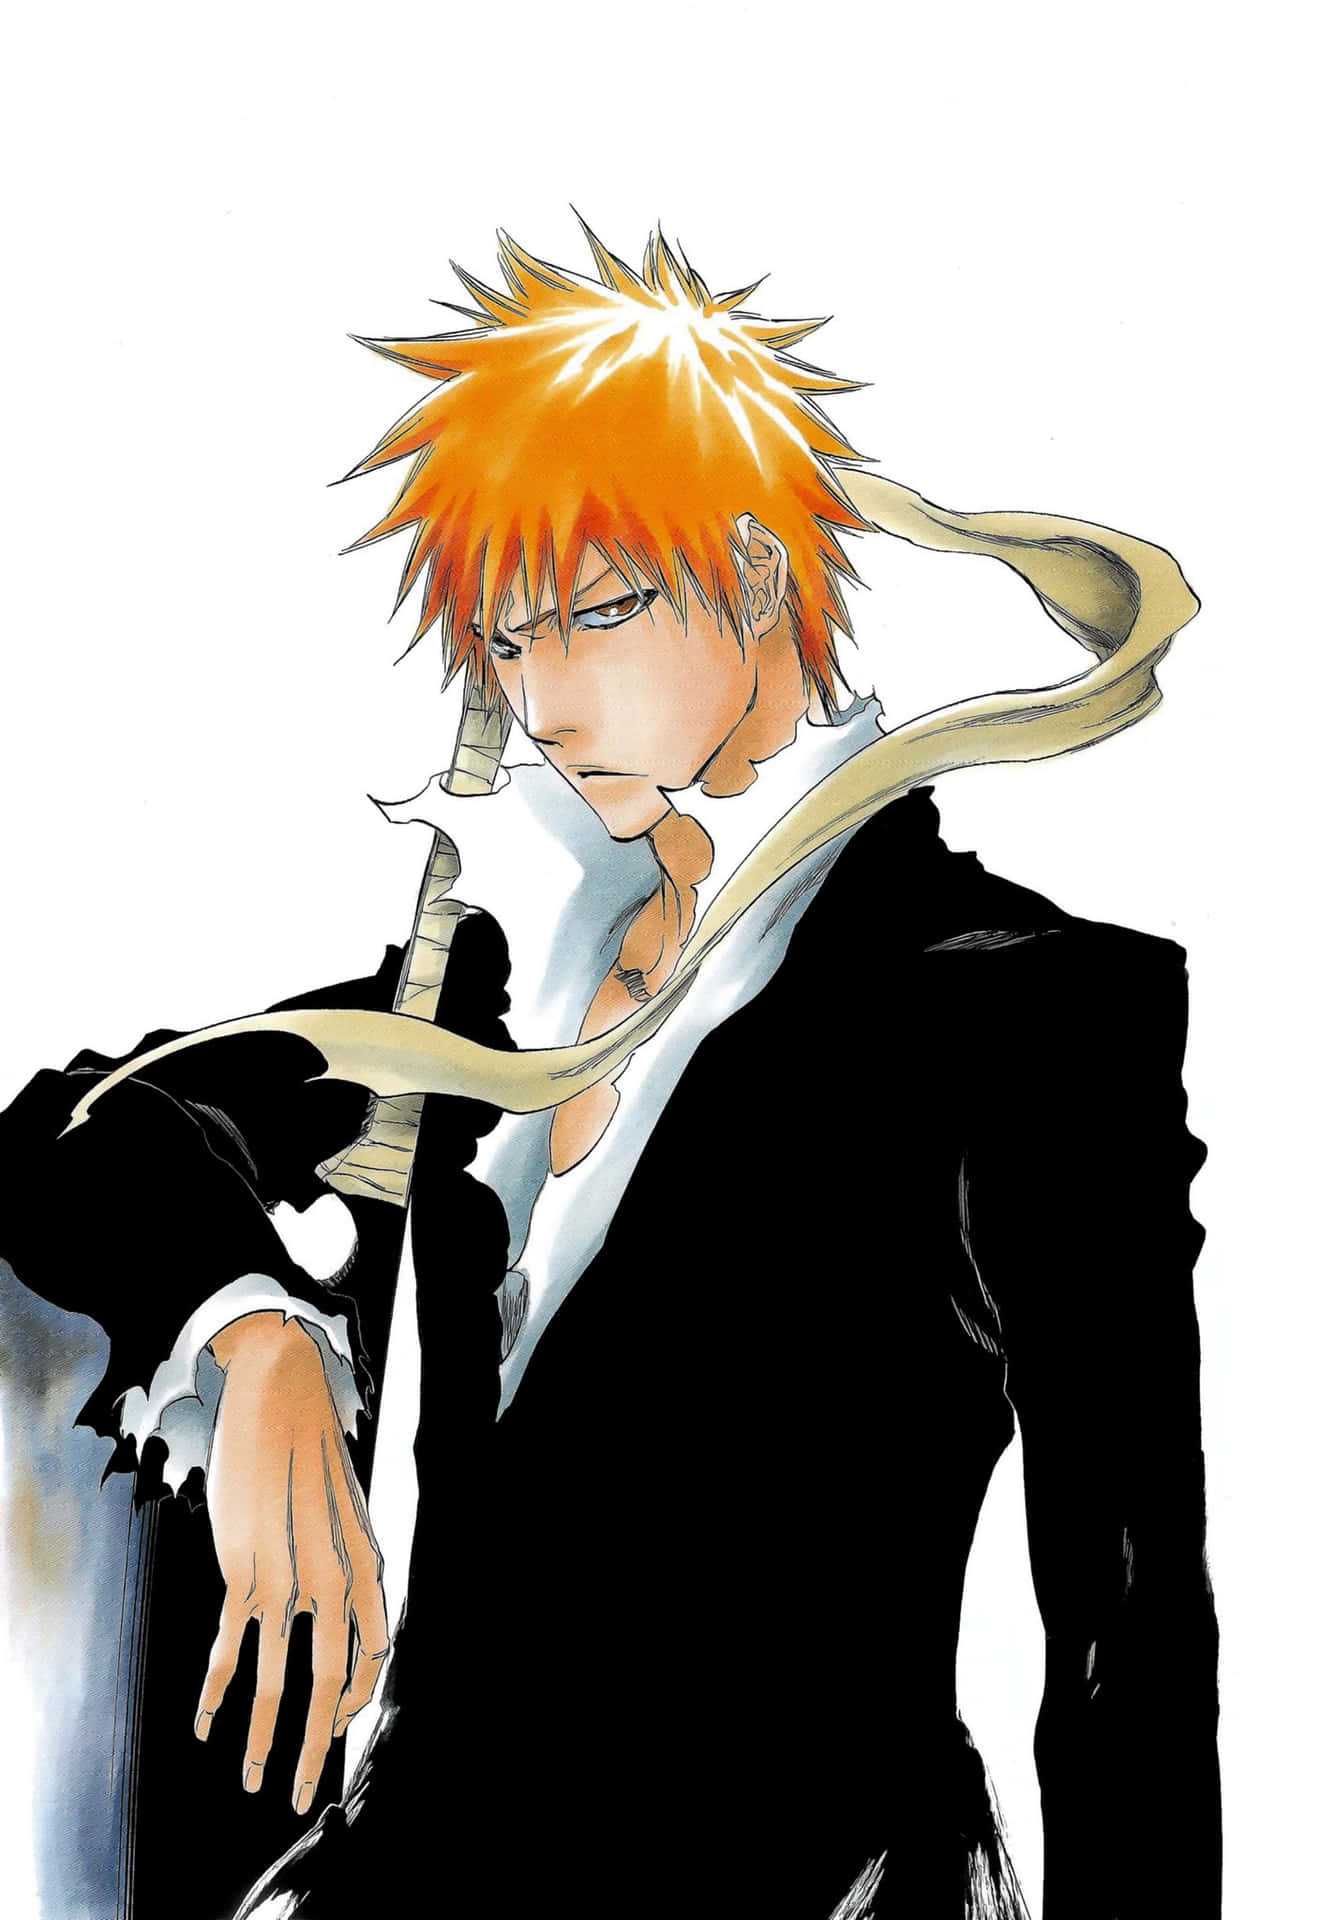 Orange Haired Anime Character Pose Wallpaper